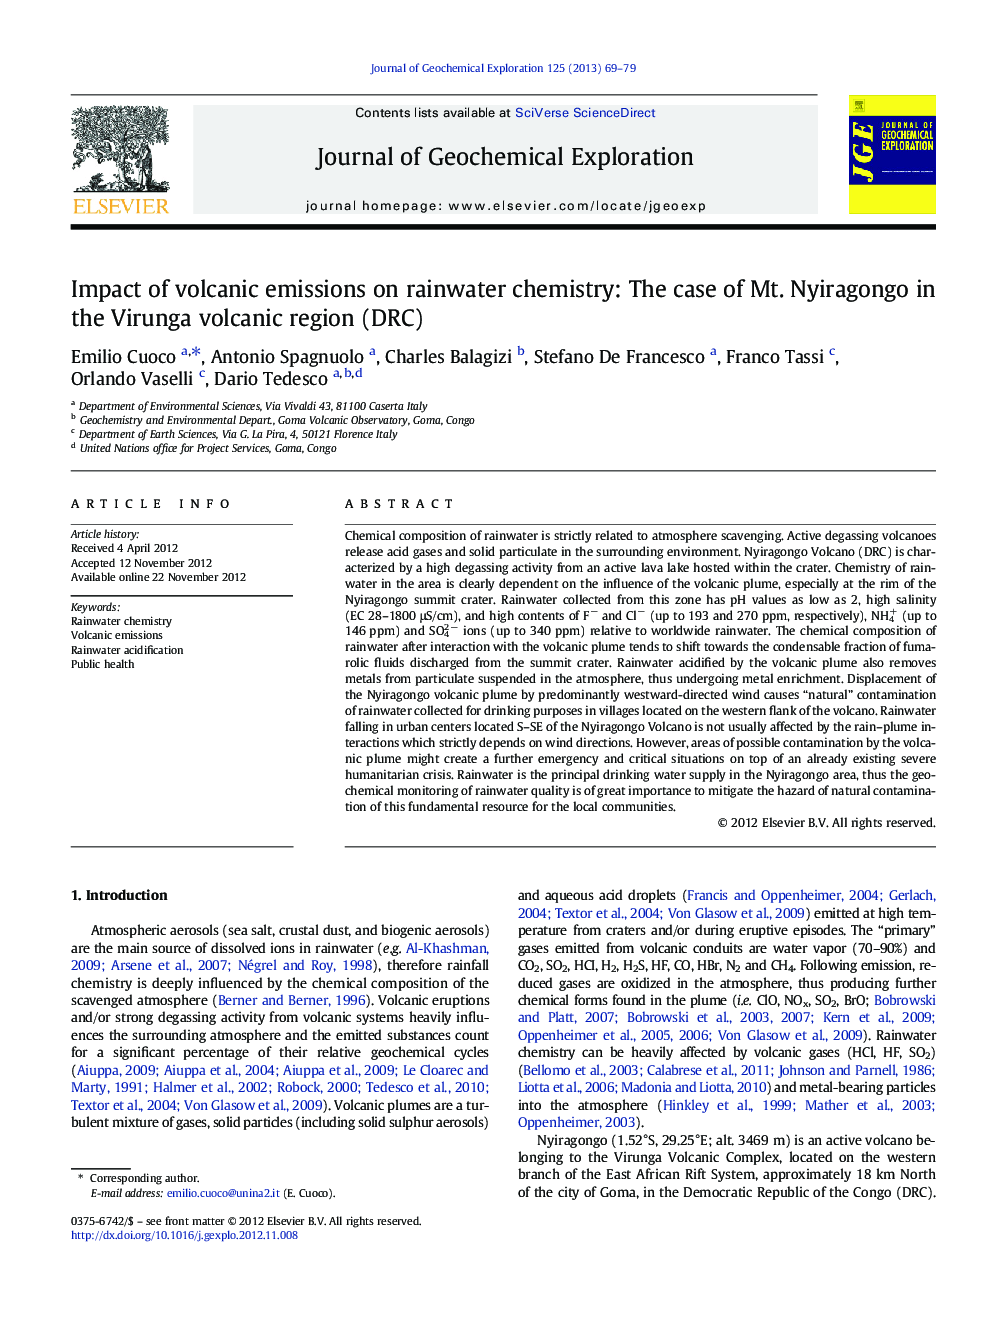 Impact of volcanic emissions on rainwater chemistry: The case of Mt. Nyiragongo in the Virunga volcanic region (DRC)